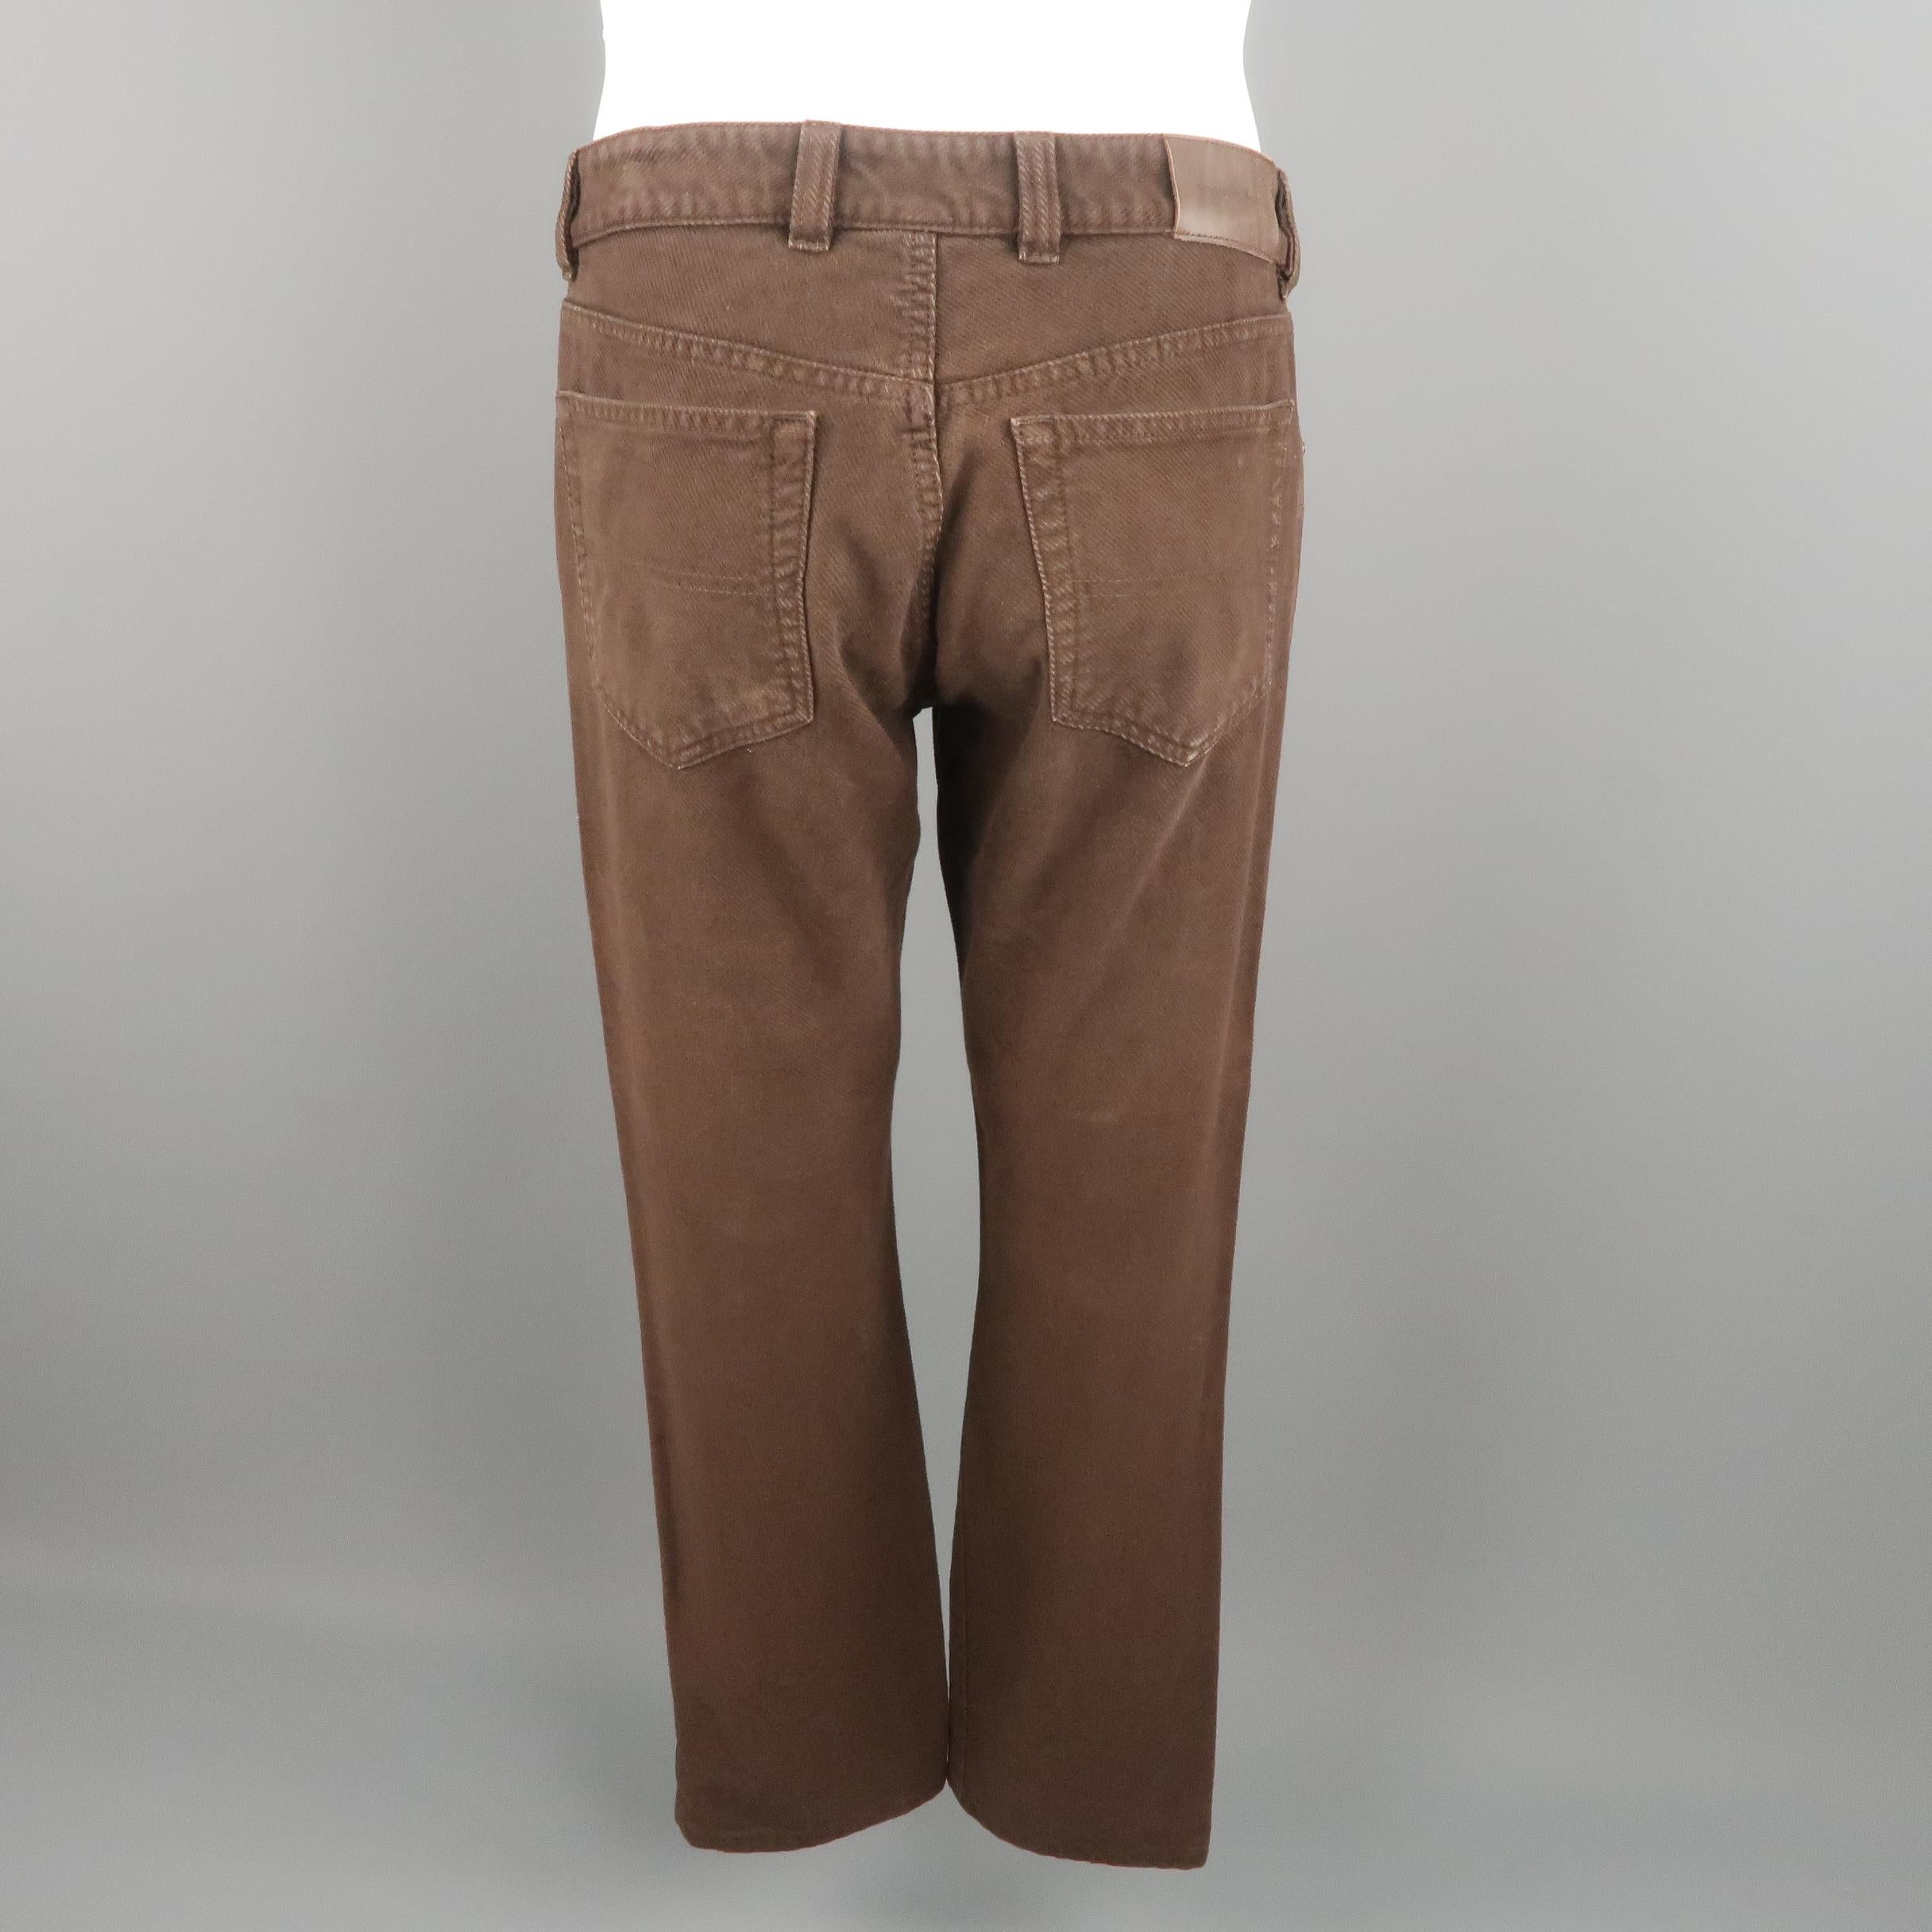 Black ERMENEGILDO ZEGNA Size 32 Brown Solid Cotton Jeans